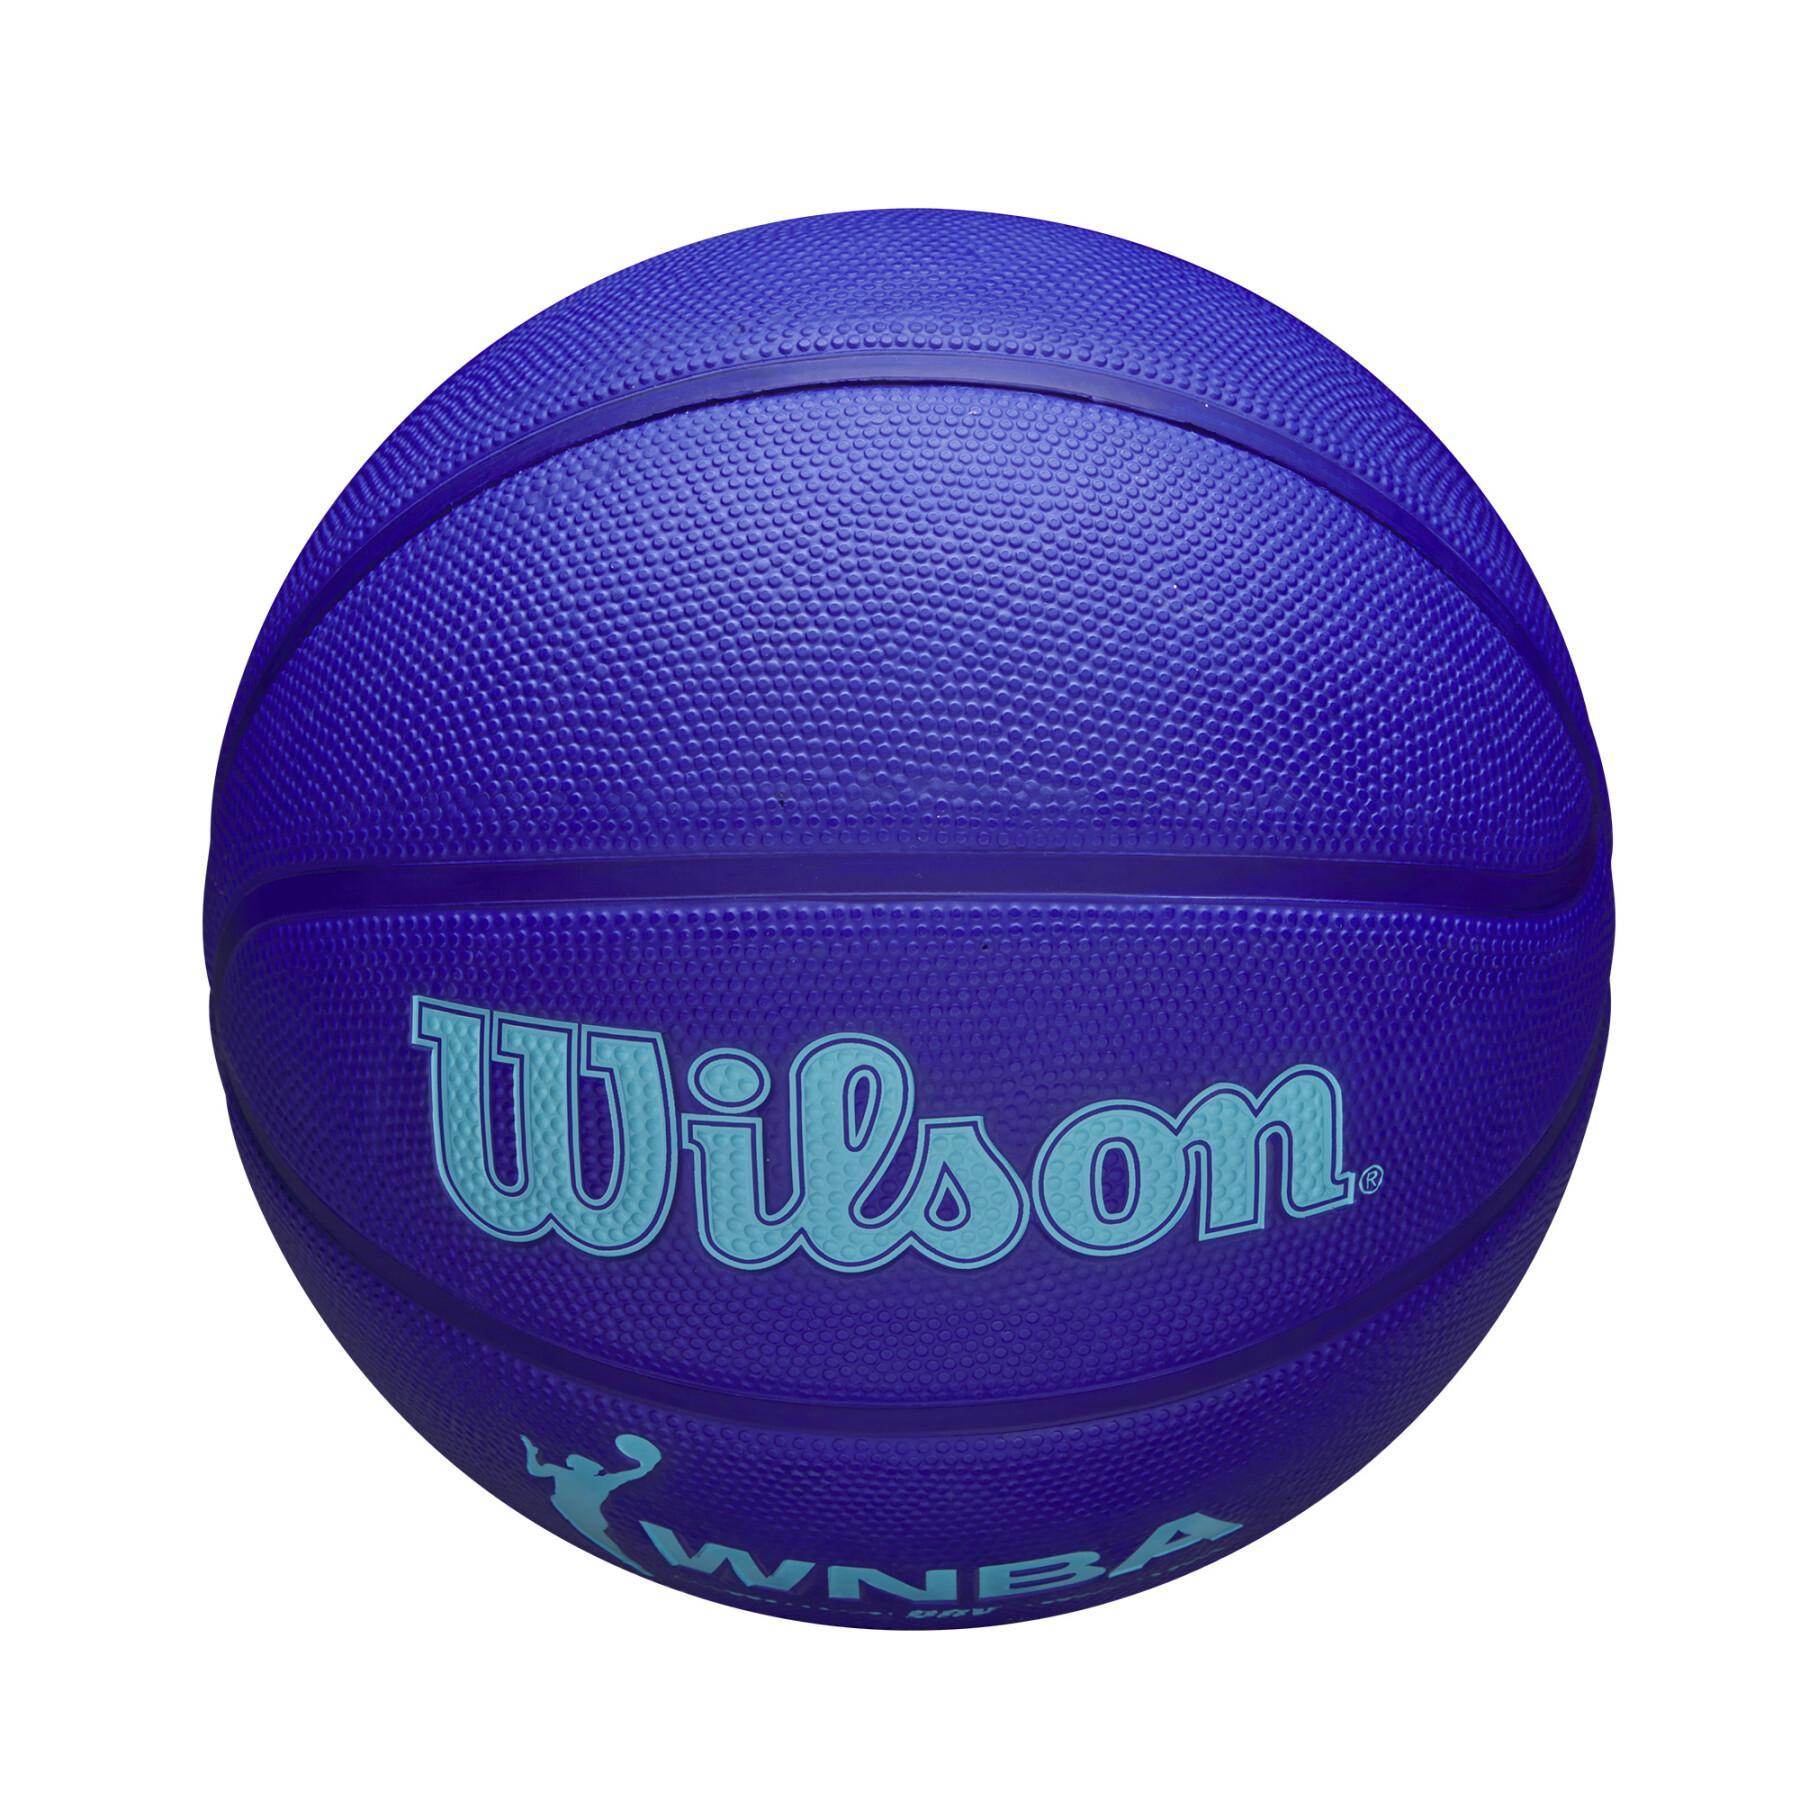 Ballong Wilson WNBA Drive